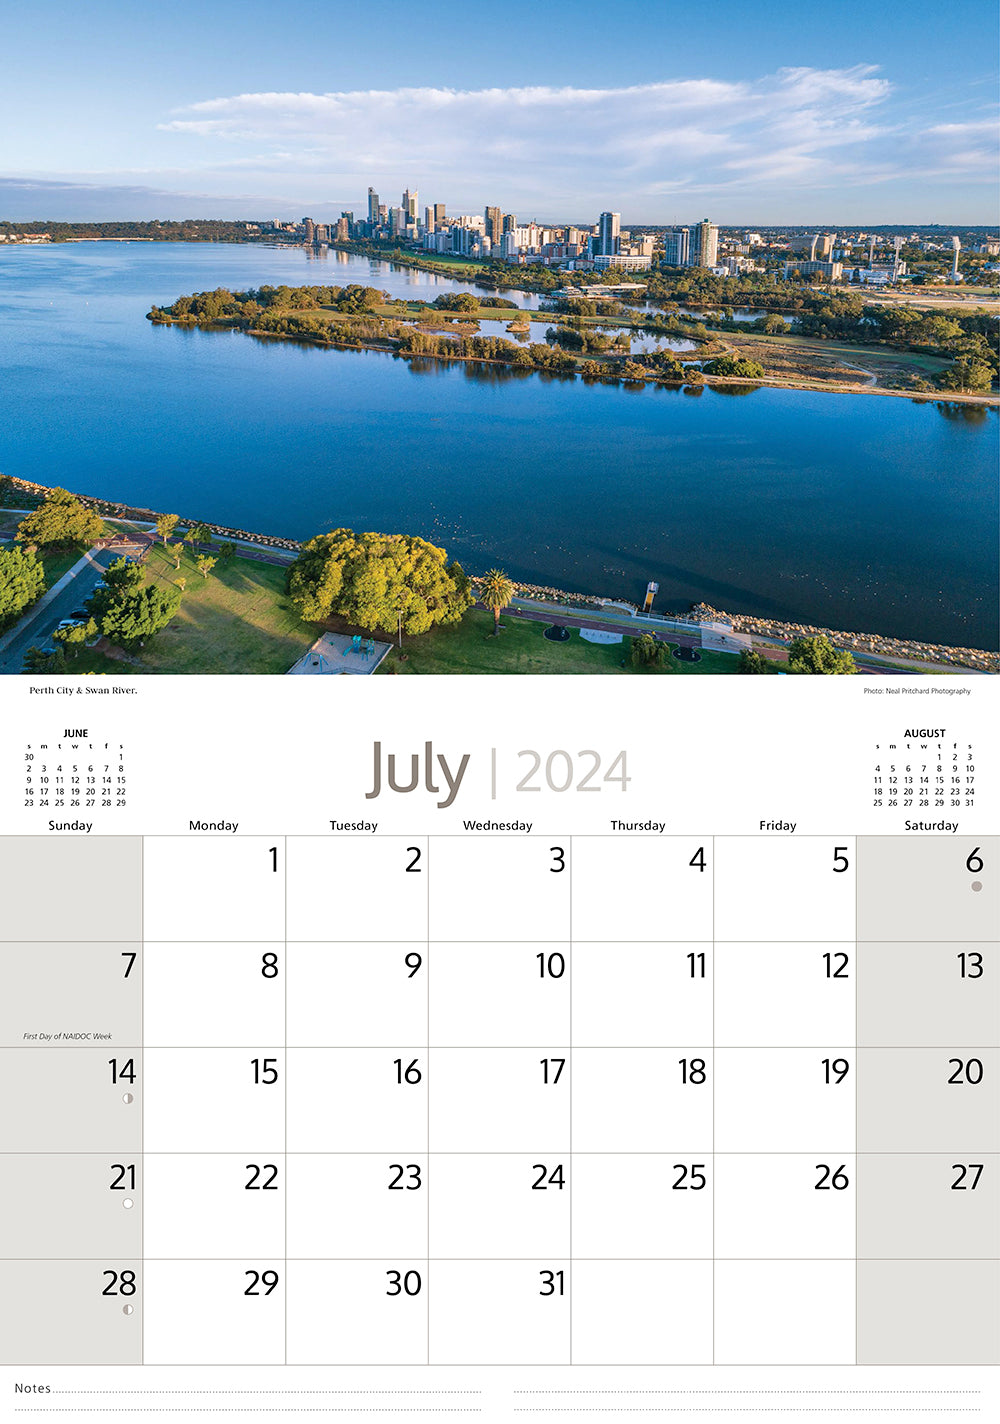 2024 Around Perth (by Artique) - Horizontal Wall Calendar